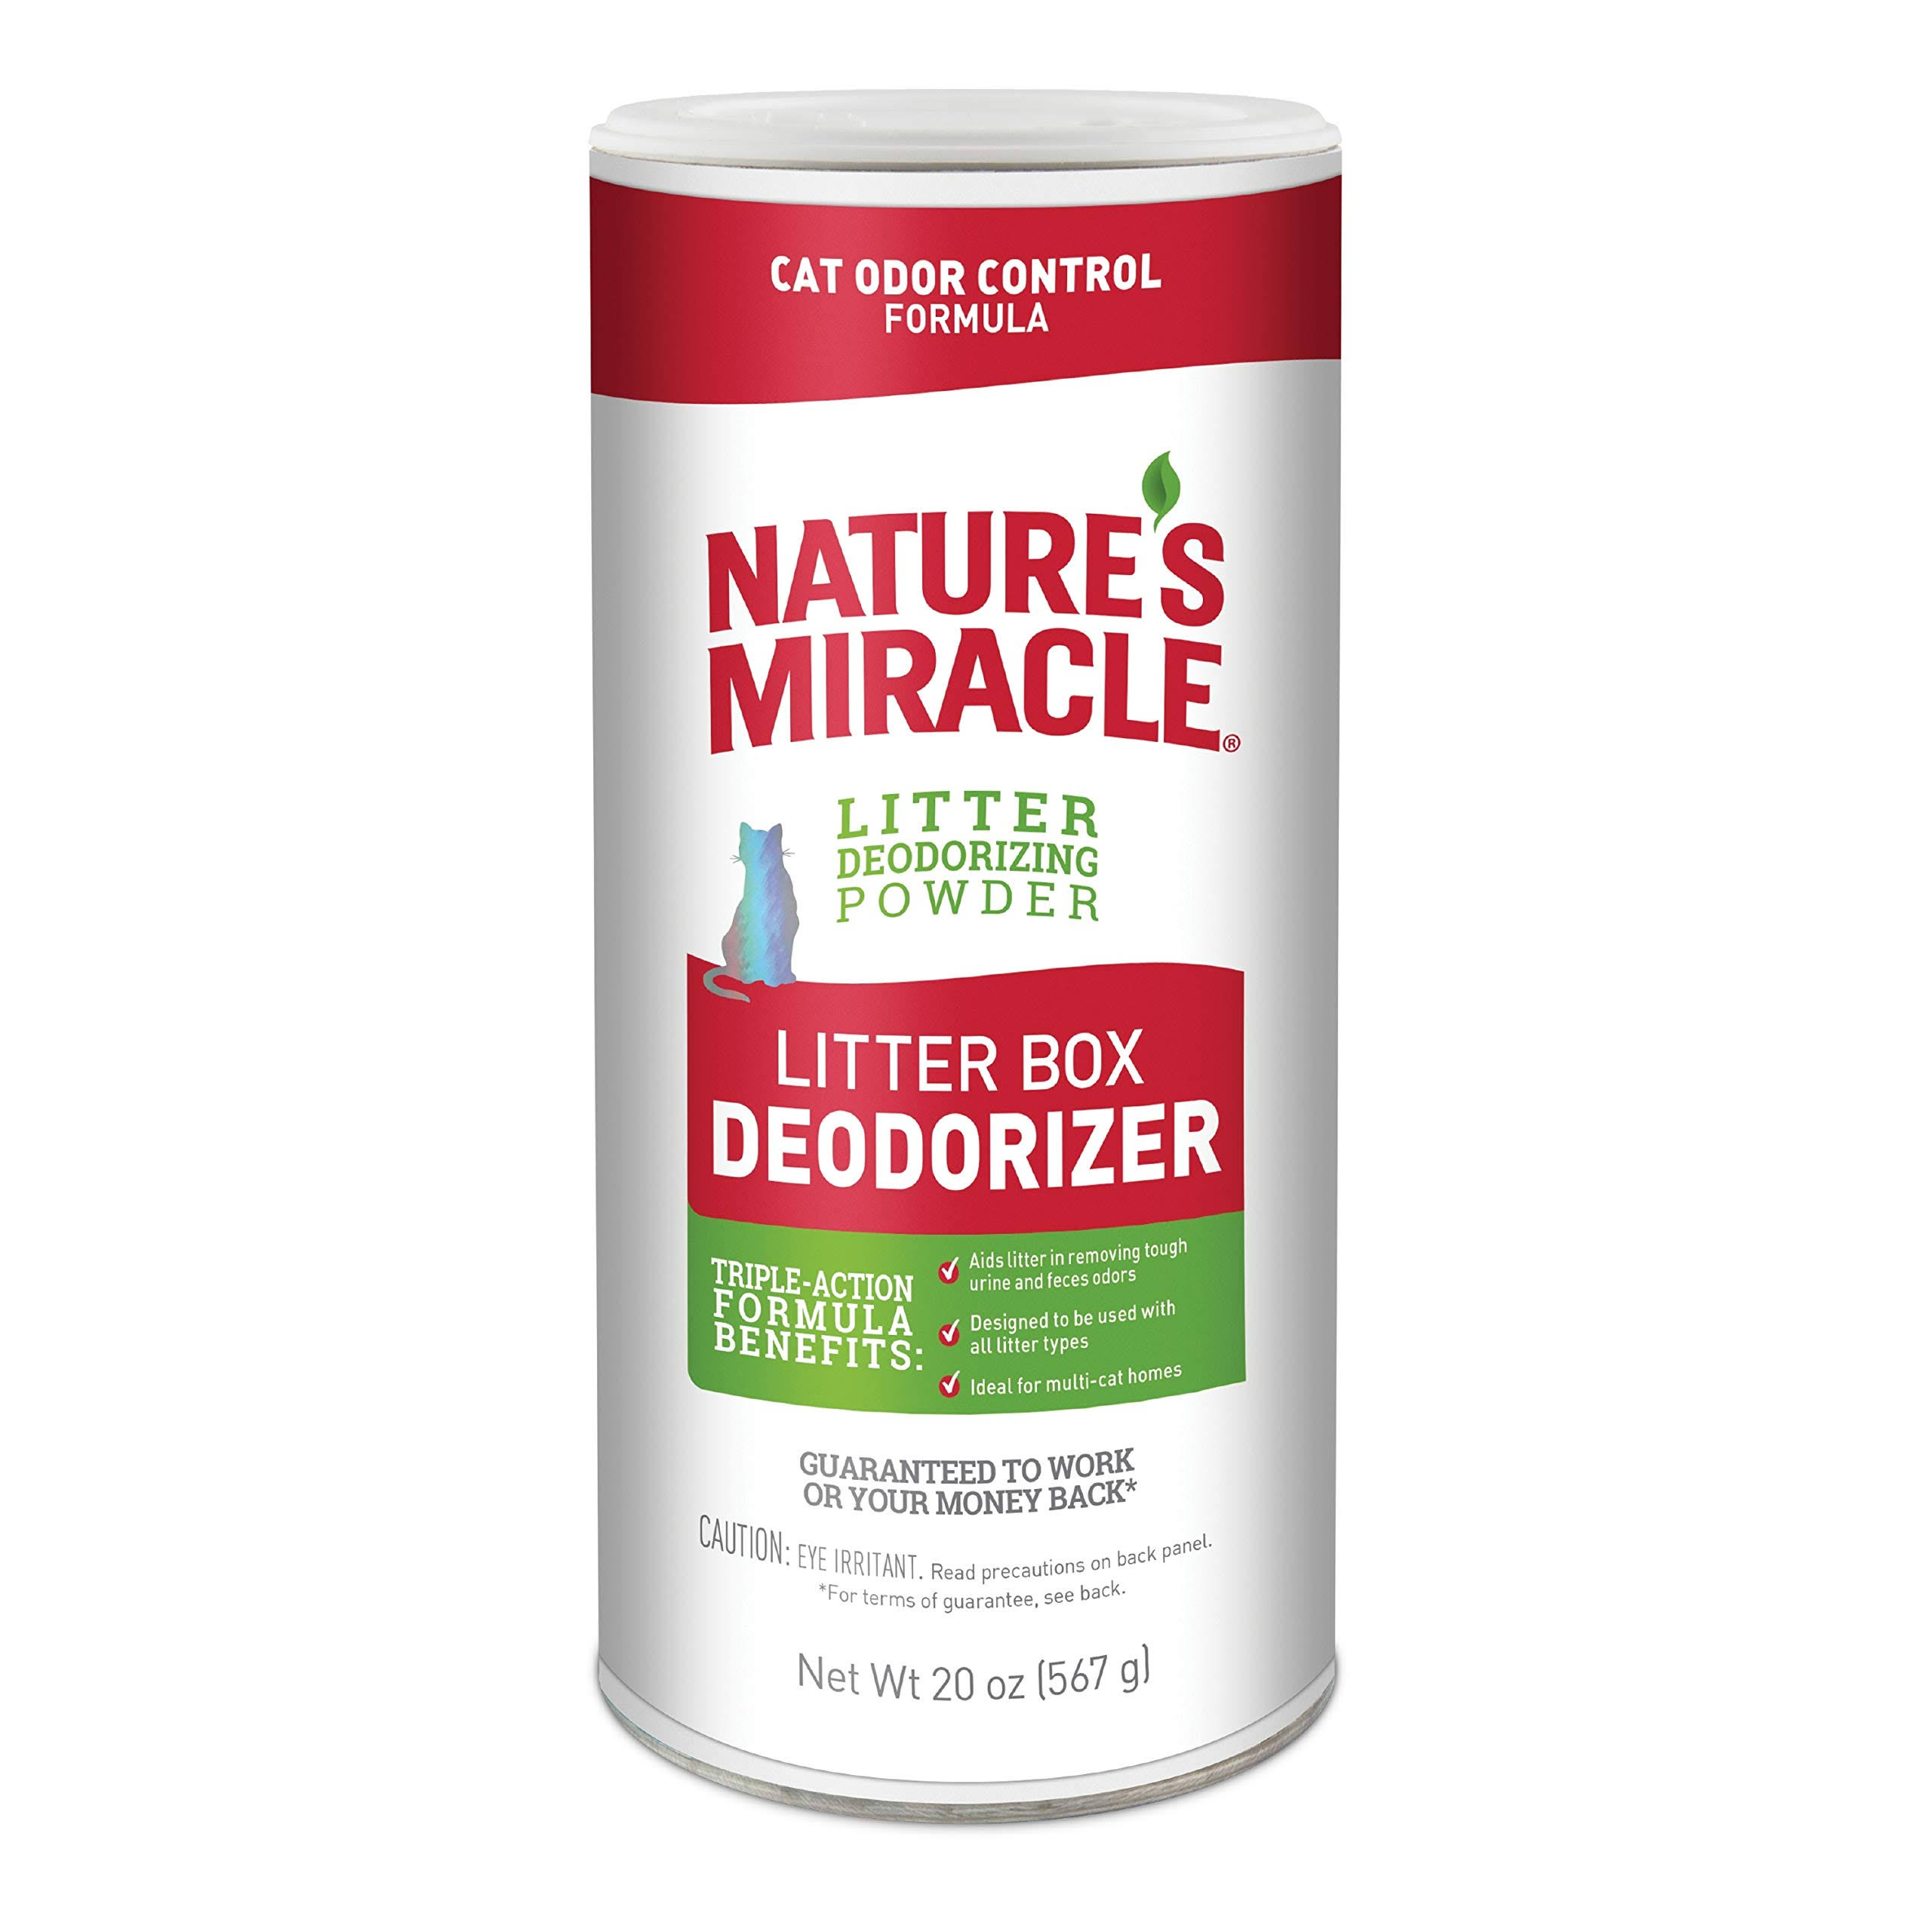 Nature's Miracle Litter Box Deodorizer, Cat Odor Control Formula